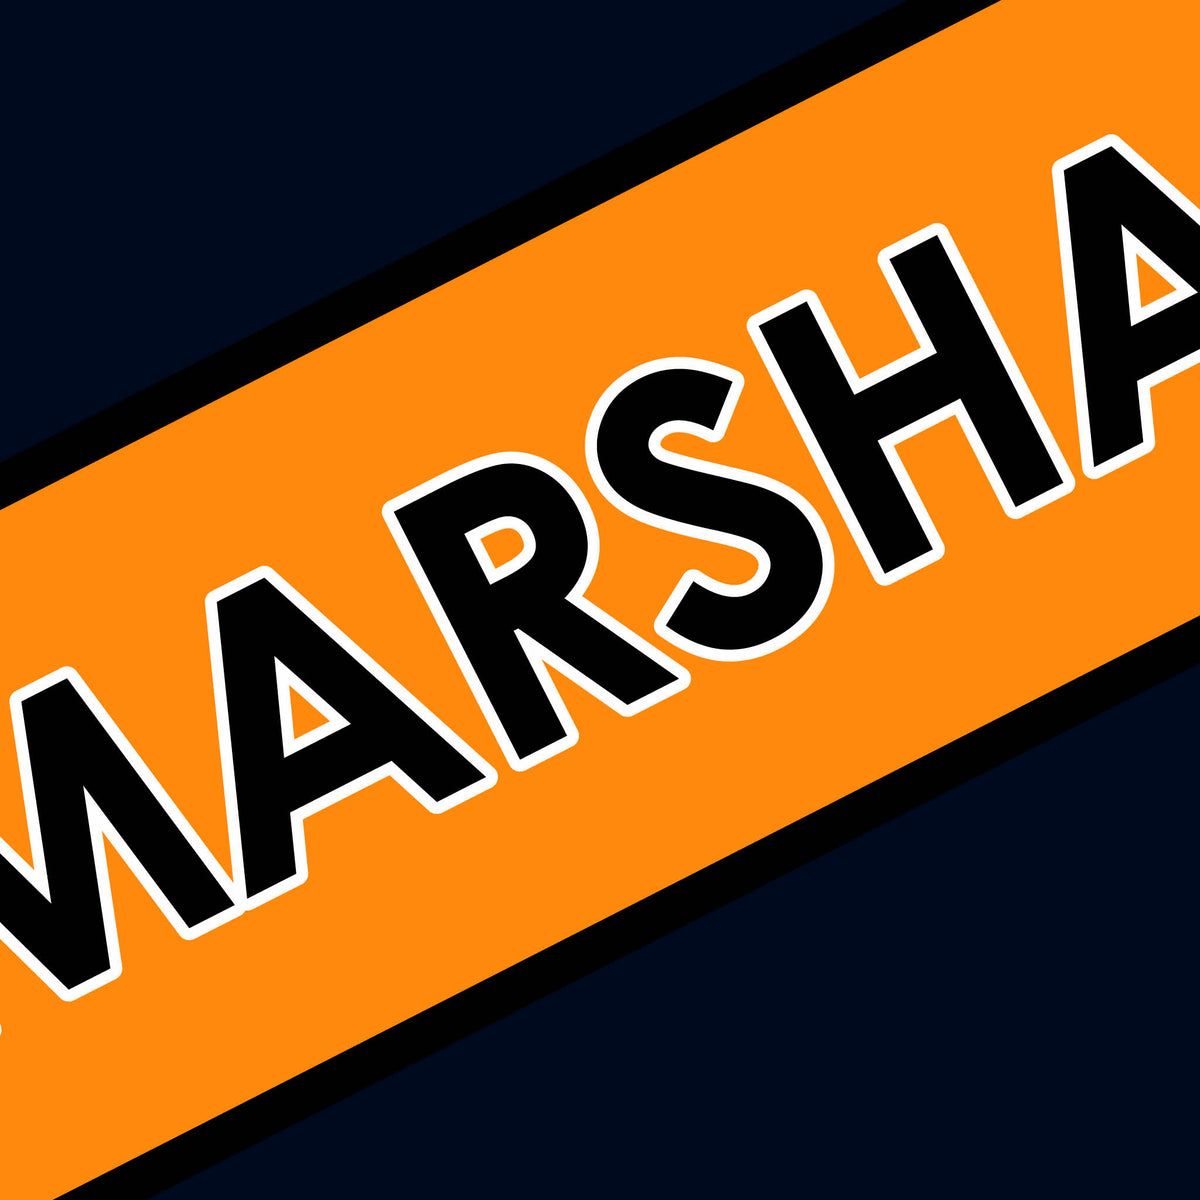 Le Mans Marshal Sticker